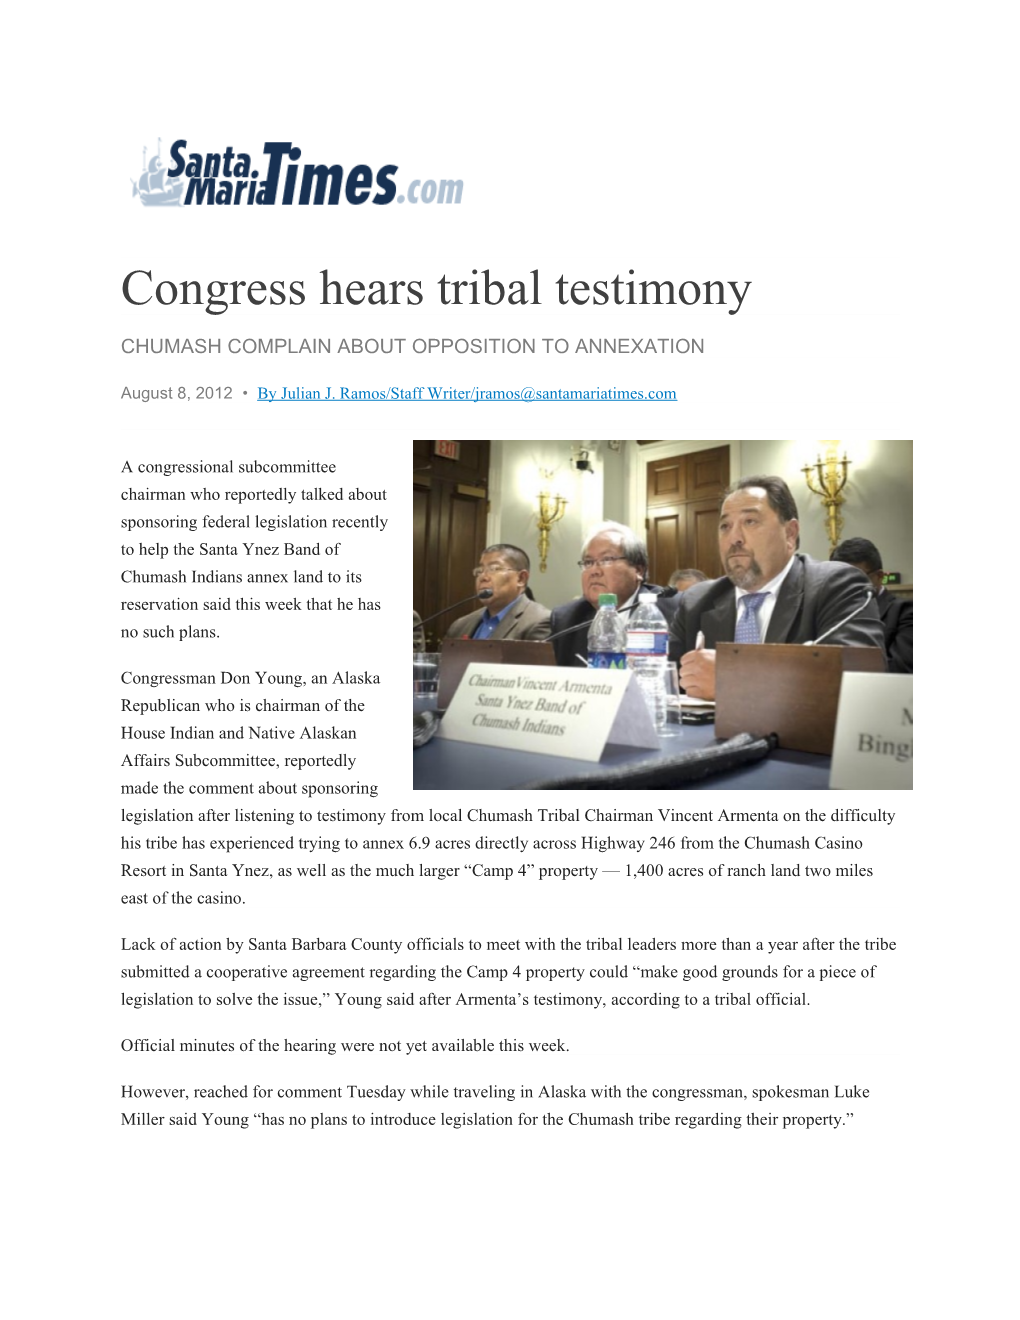 Congress Hears Tribal Testimony